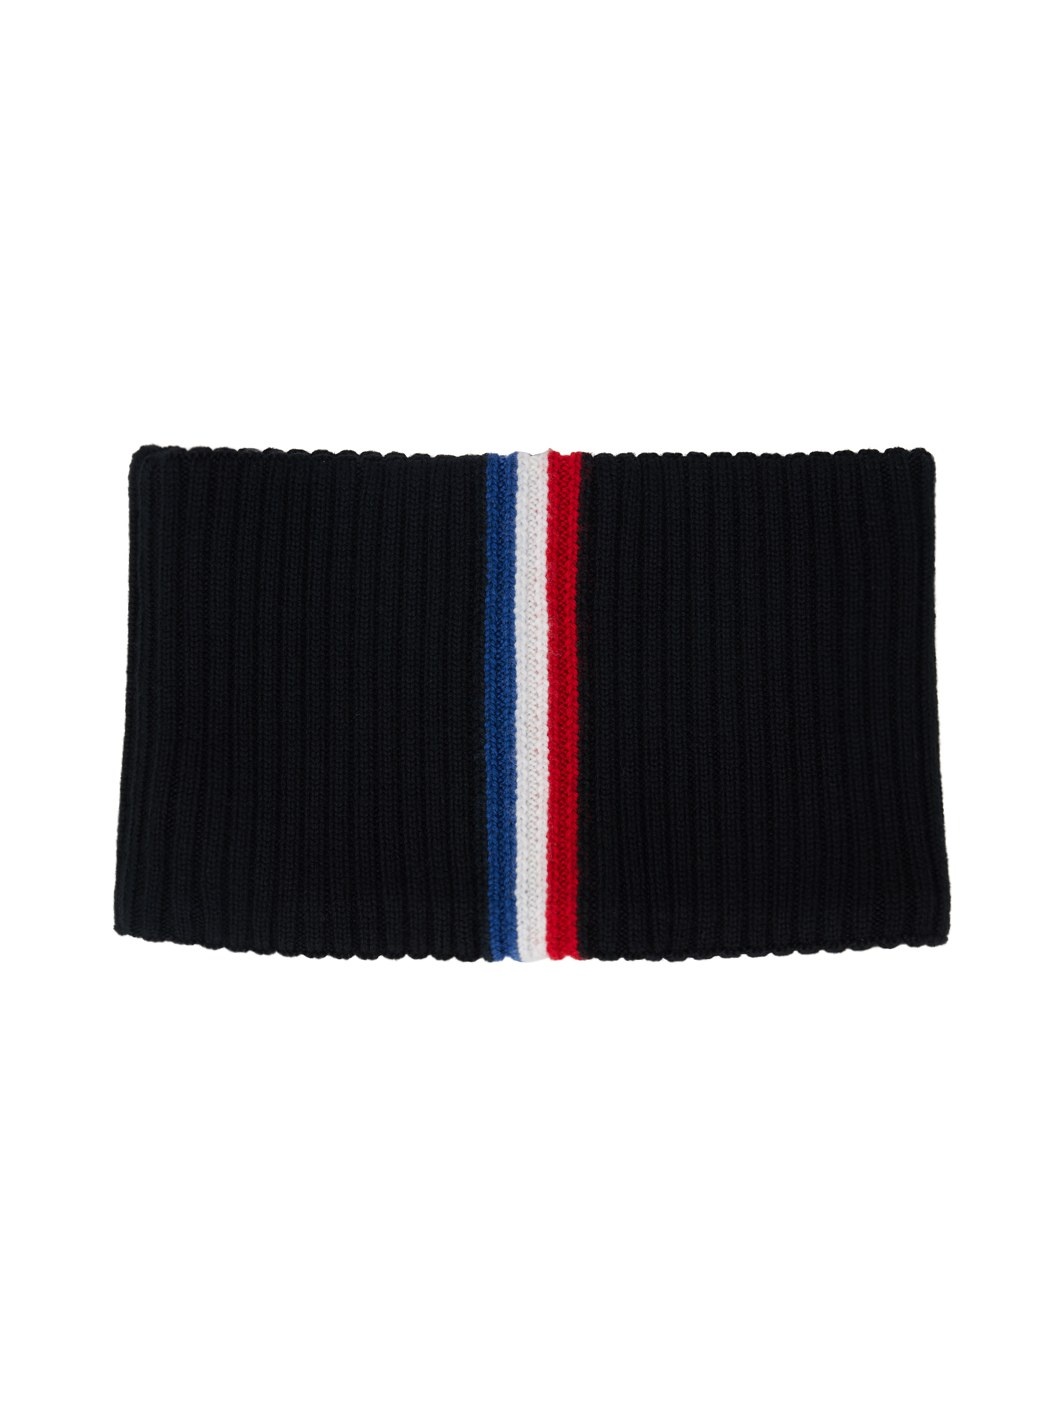 Black Tricolor Headband - 2